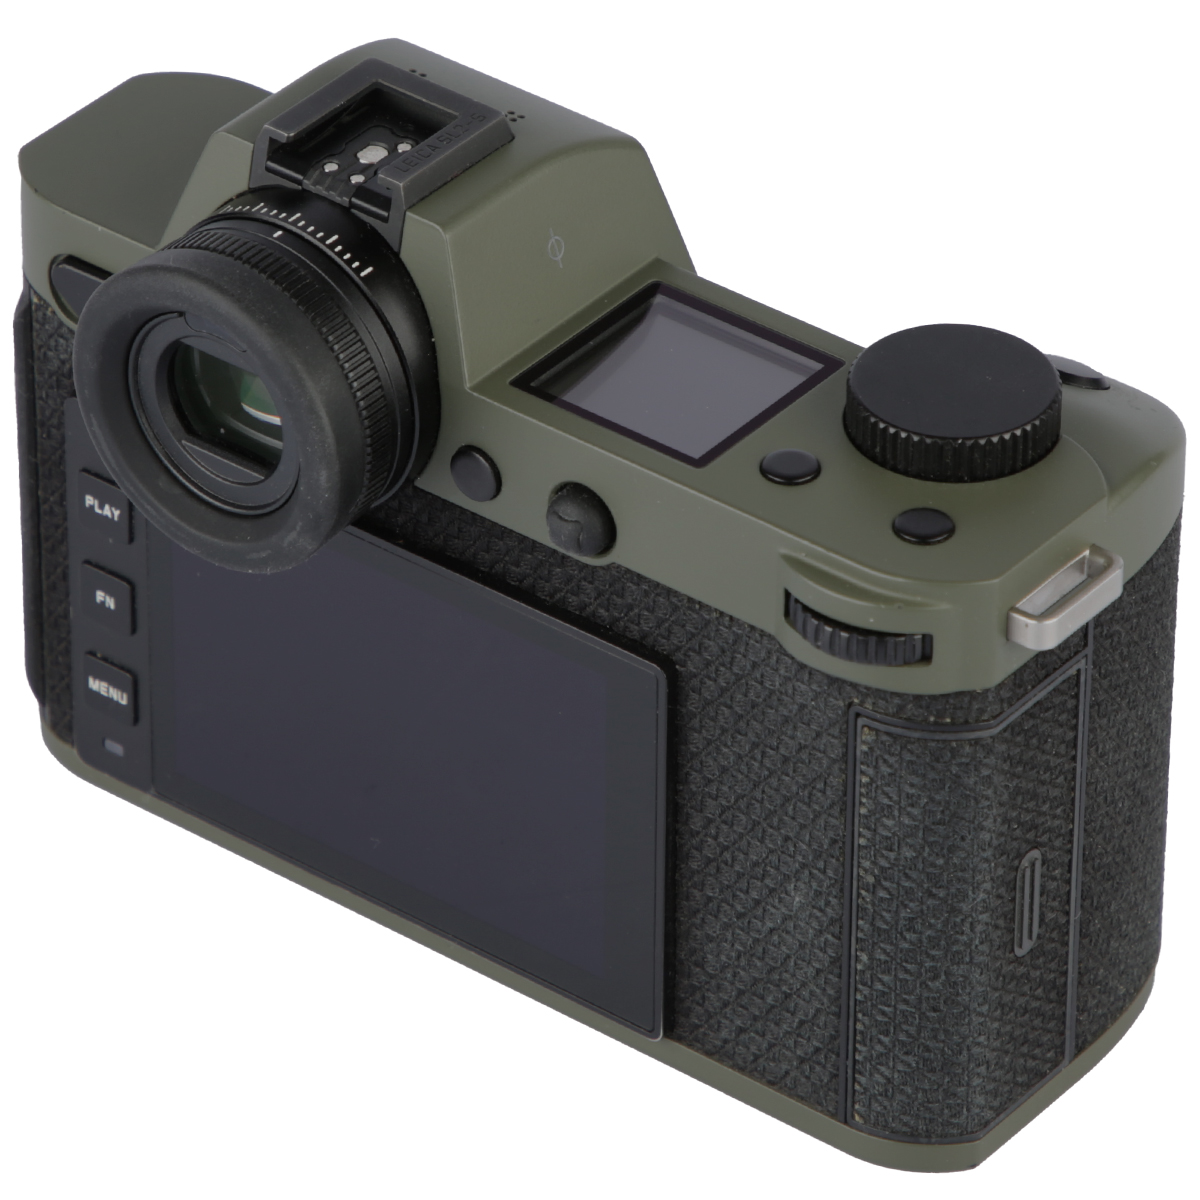 Leica SL2 S Reporter Gebraucht